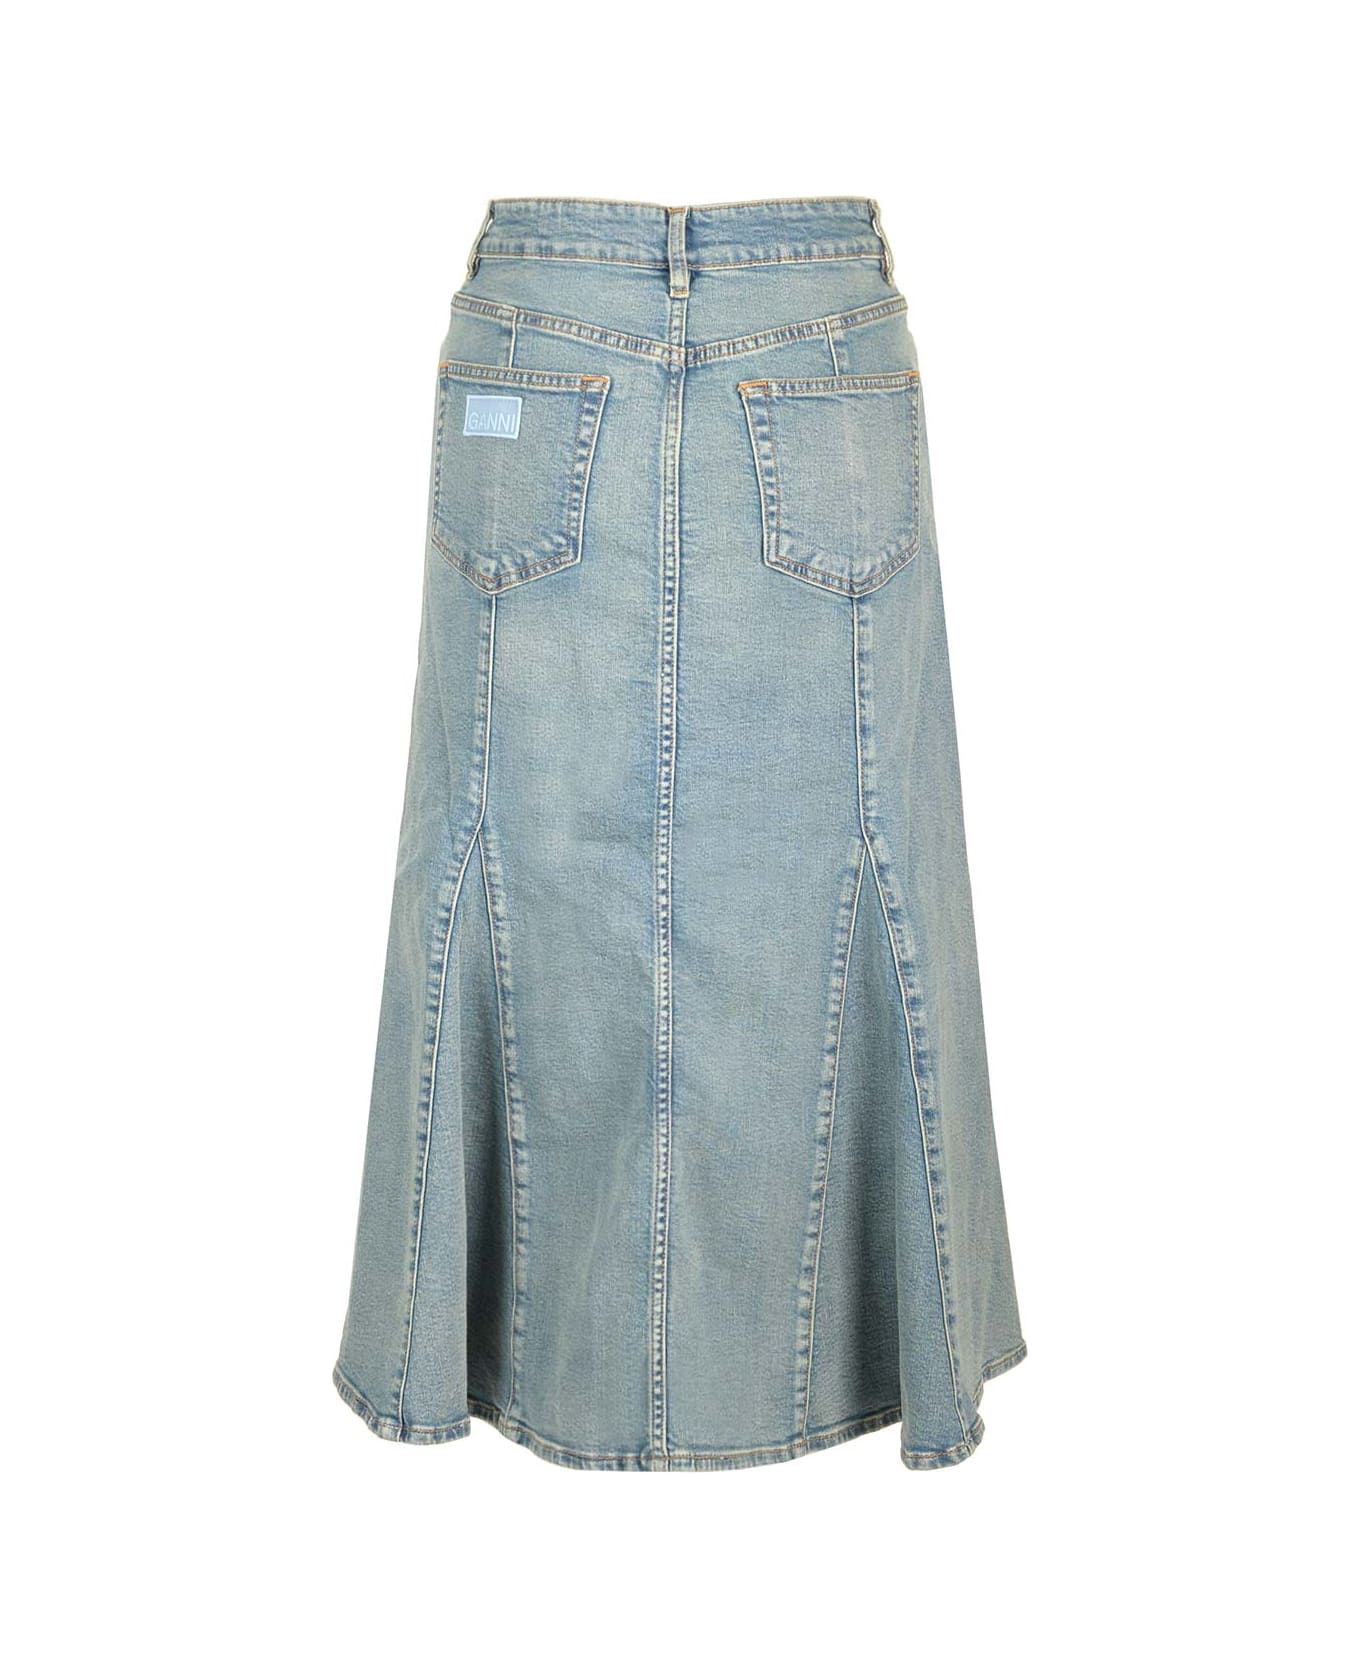 Ganni Peplum Midi Skirt - Stone Washed スカート